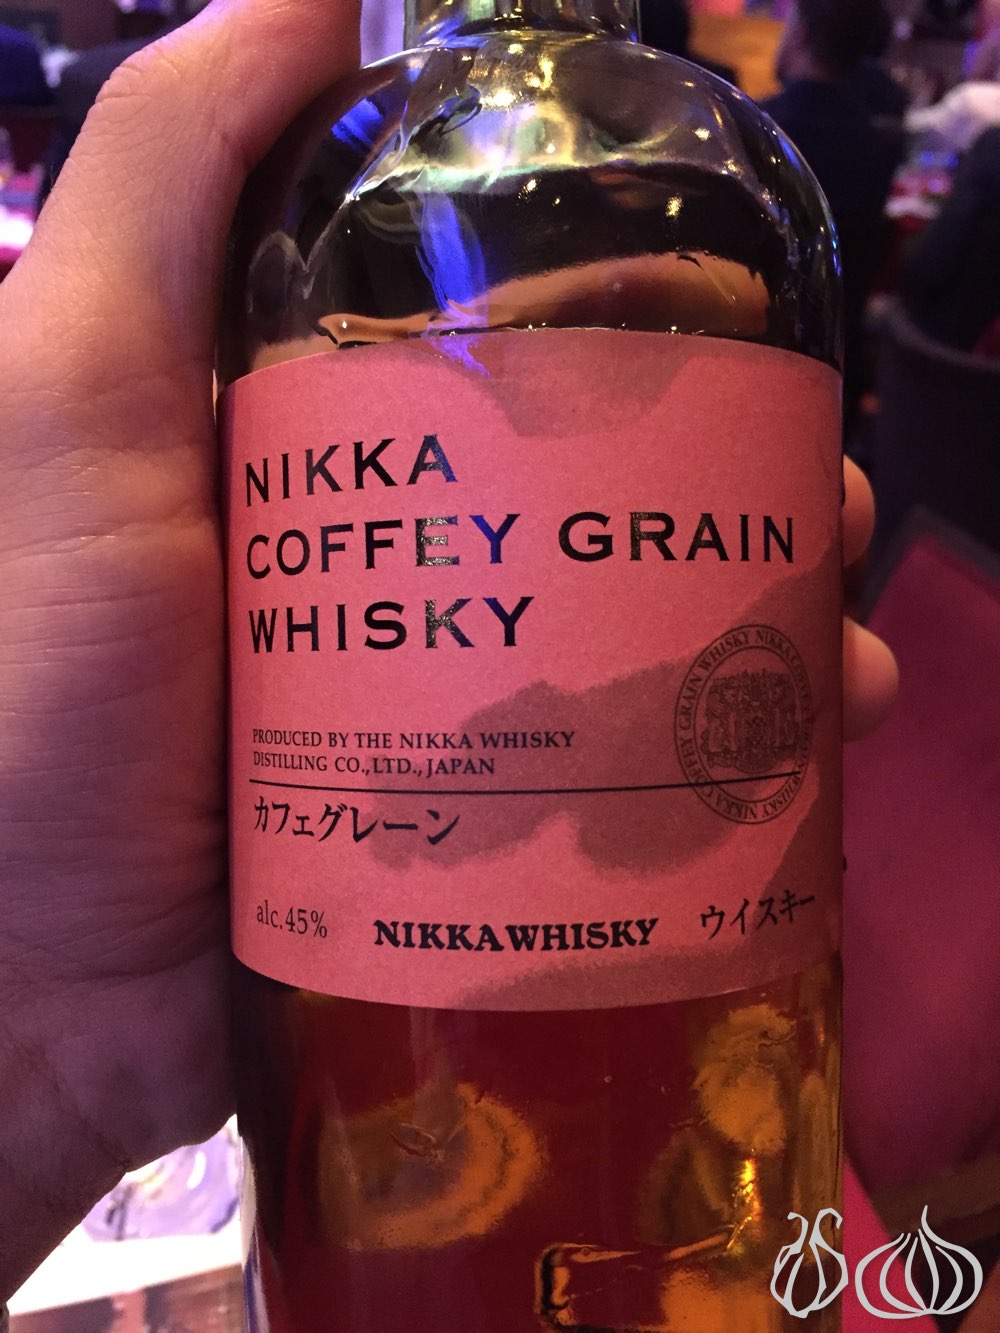 nikka-whisky-shogun-verdun82015-10-16-01-37-27